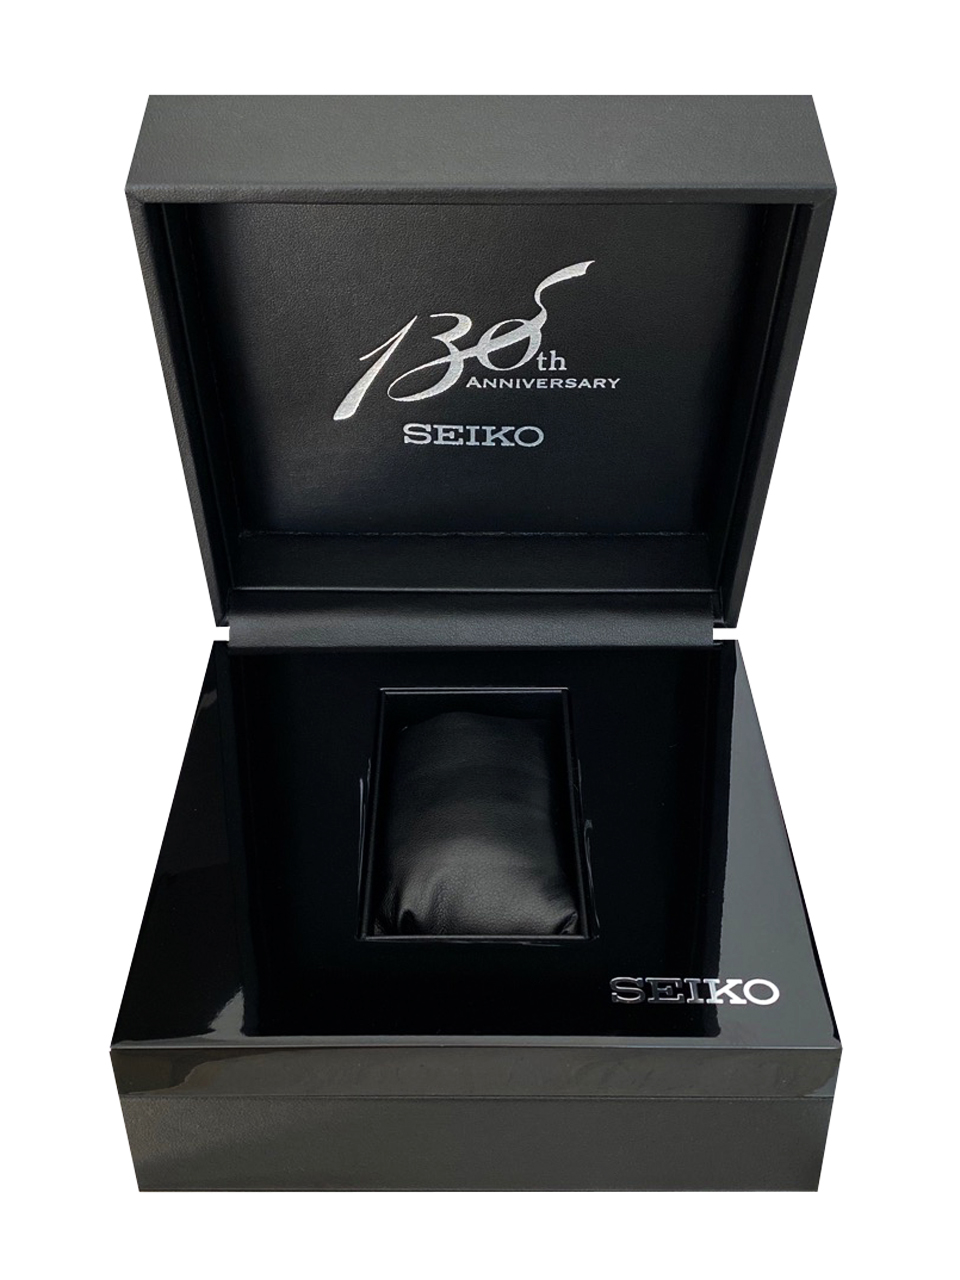 Seiko 130th Anniversary Grand Seiko 2000s - Gisbert A. Joseph Watches